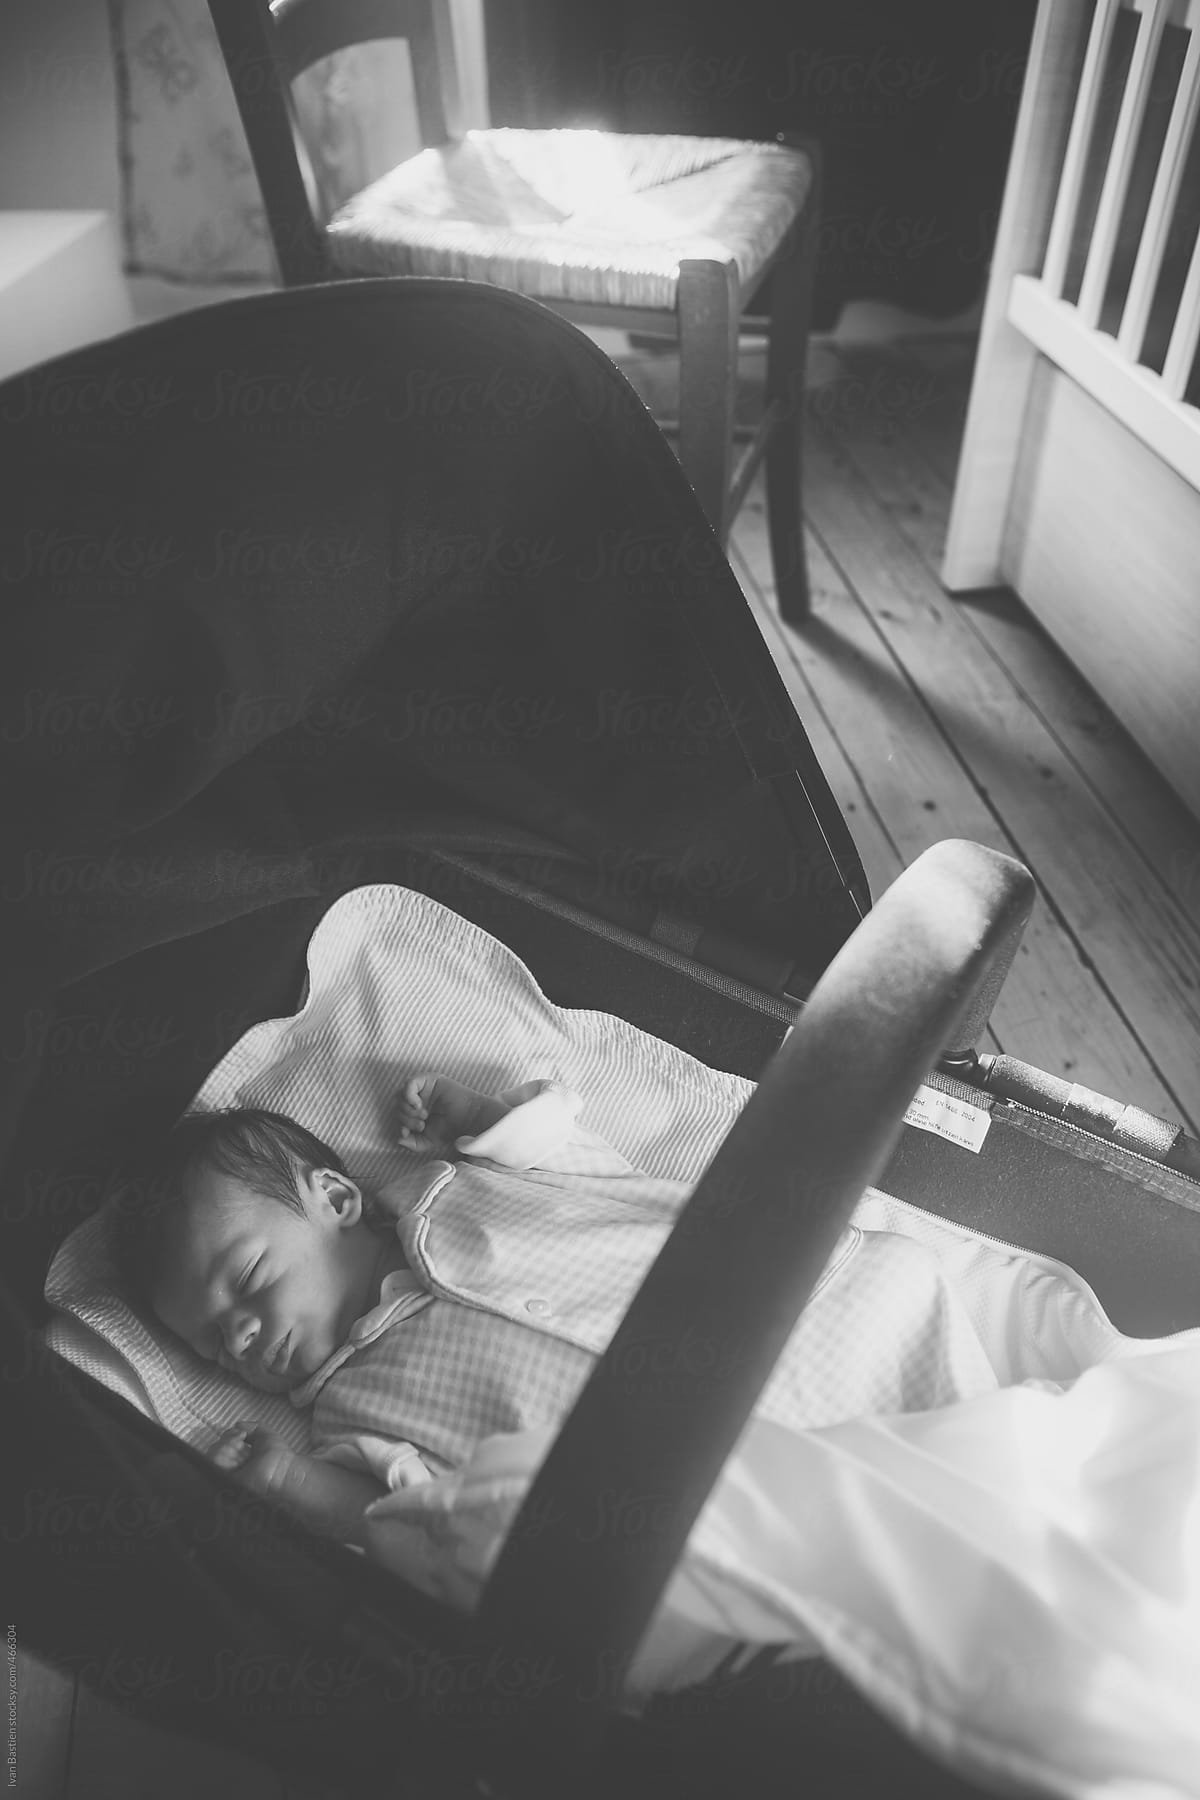 One week old baby boy in a bassinet in his bedroom